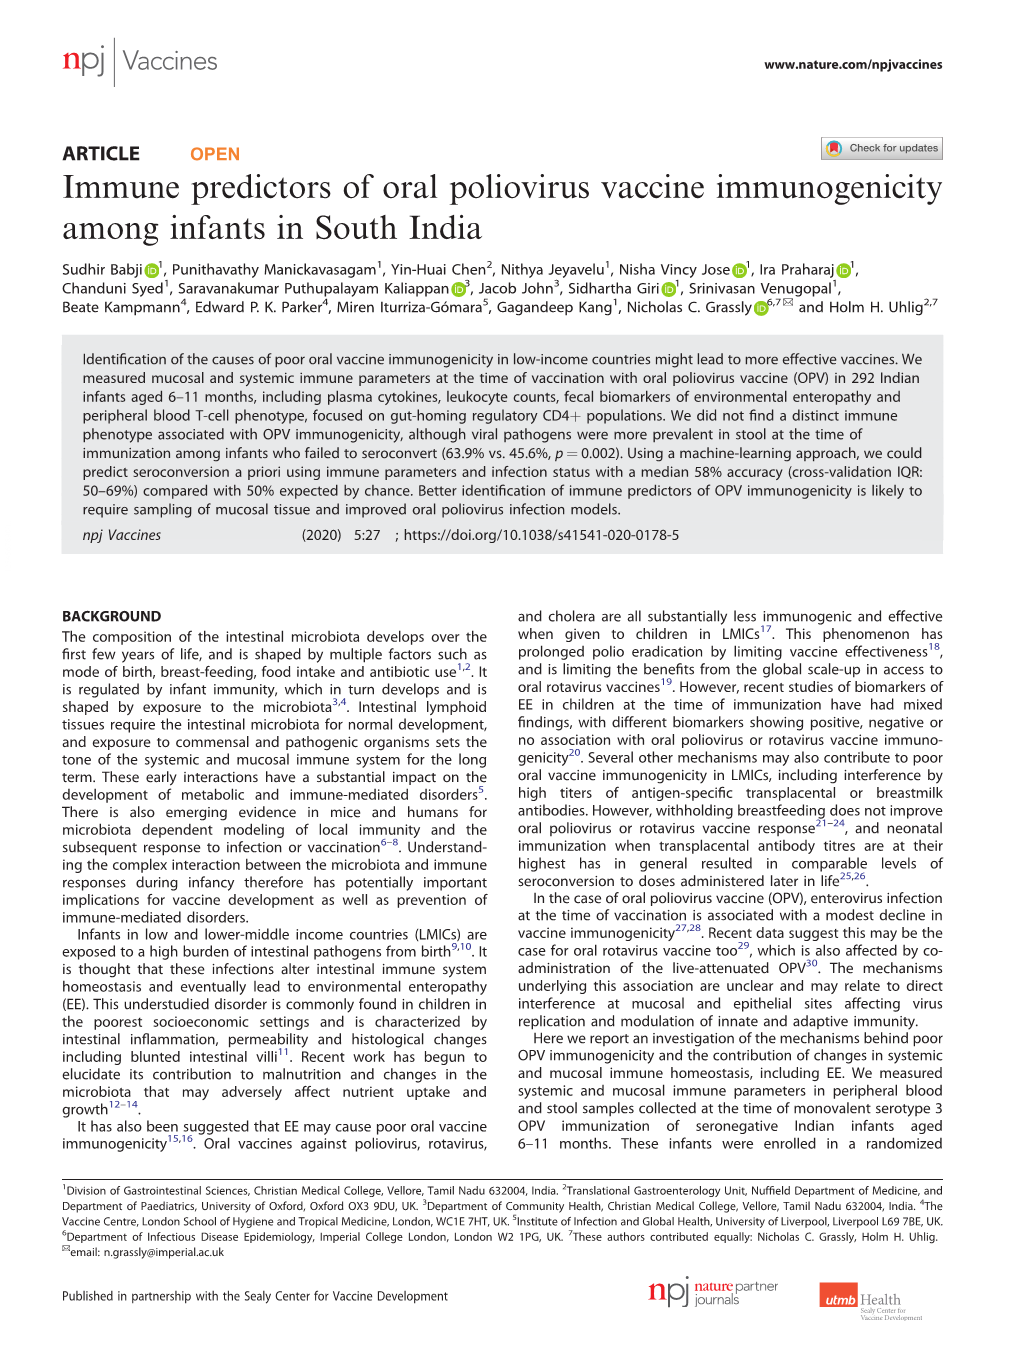 Immune Predictors of Oral Poliovirus Vaccine Immunogenicity Among Infants in South India